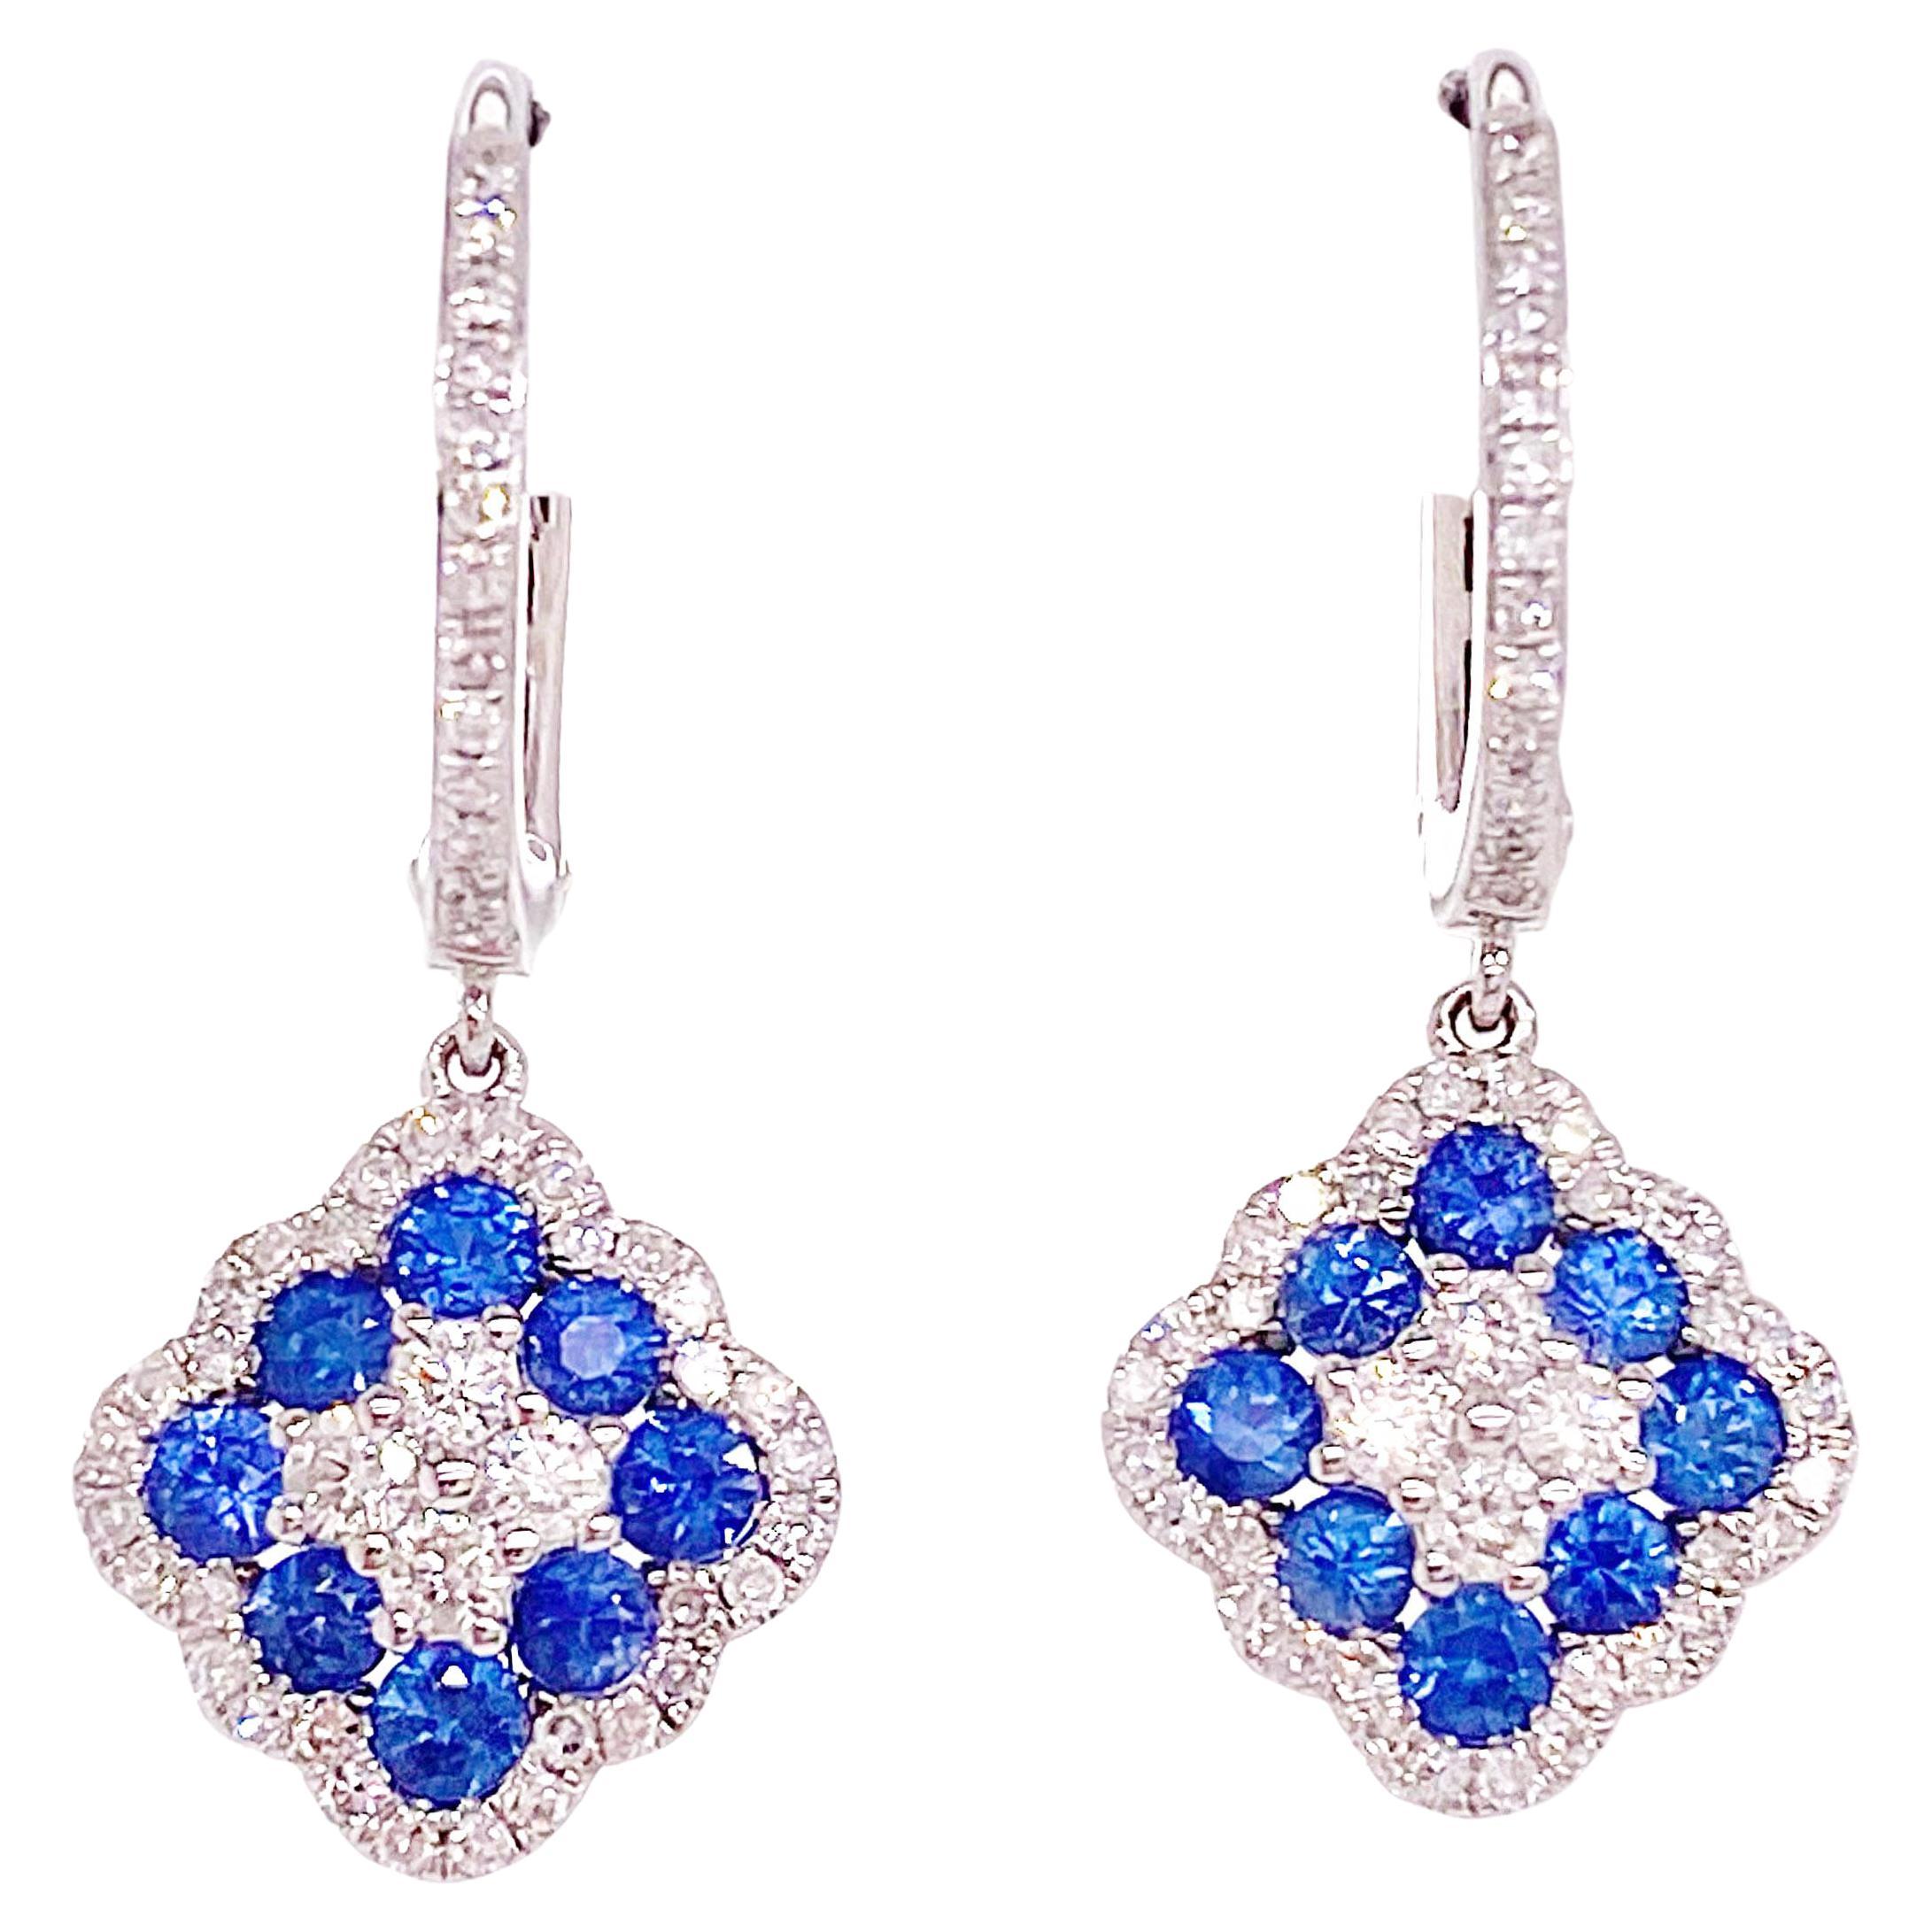 1.29 Carat Clover Sapphire Dangle Earrings w Diamonds 14K White Gold